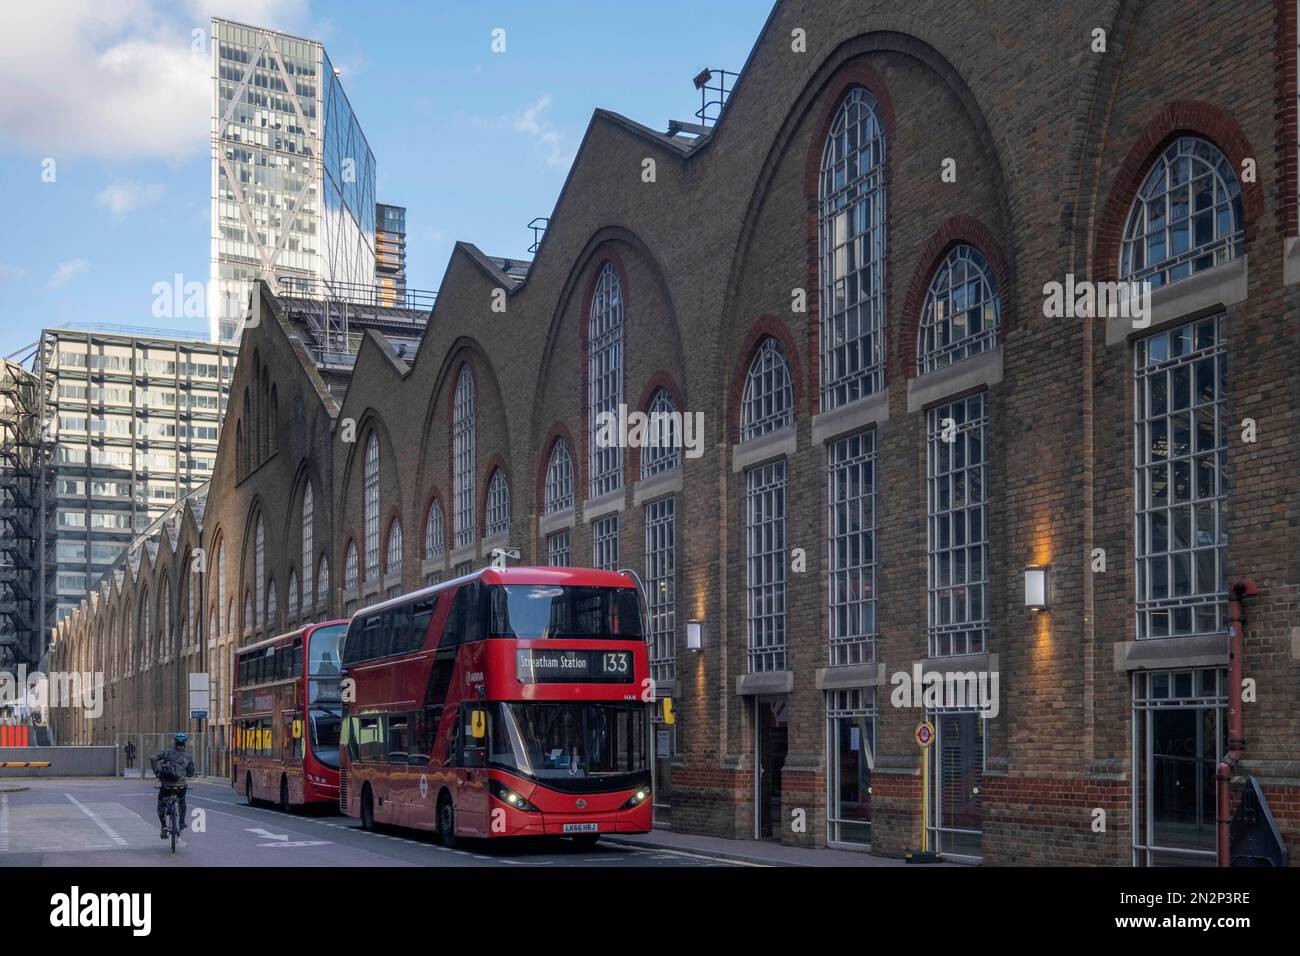 London, City of London, Liverpool Street Station. Der Red London Bus 133 hält vor der Liverpool Street Station an der Sun Street Passage Stockfoto